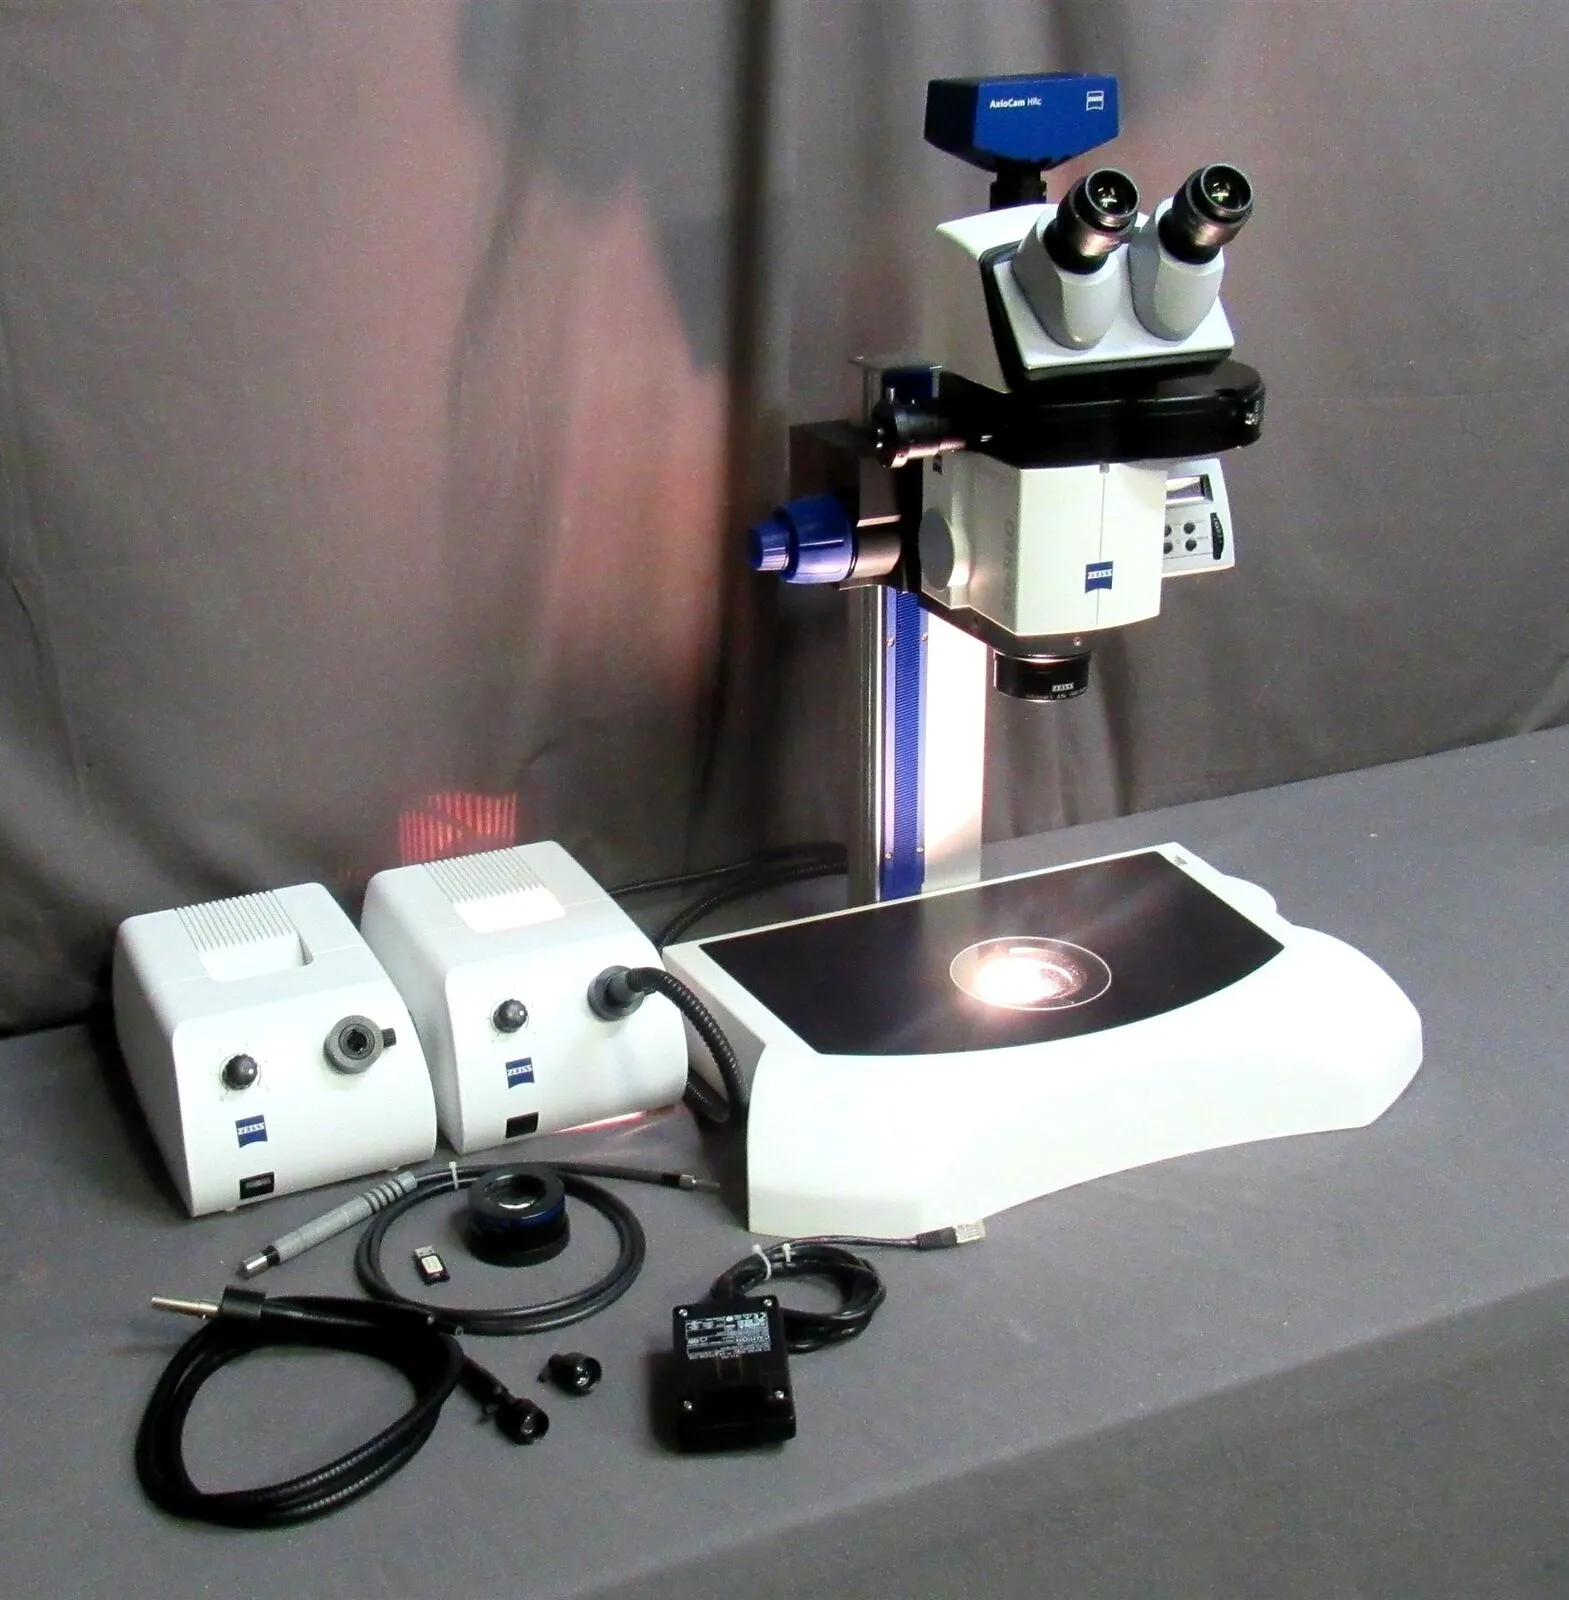 ZEISS Discovery V12 TRINOCULAR M2BIO PENTAFLUOR Fluorescence Microscope & CAM